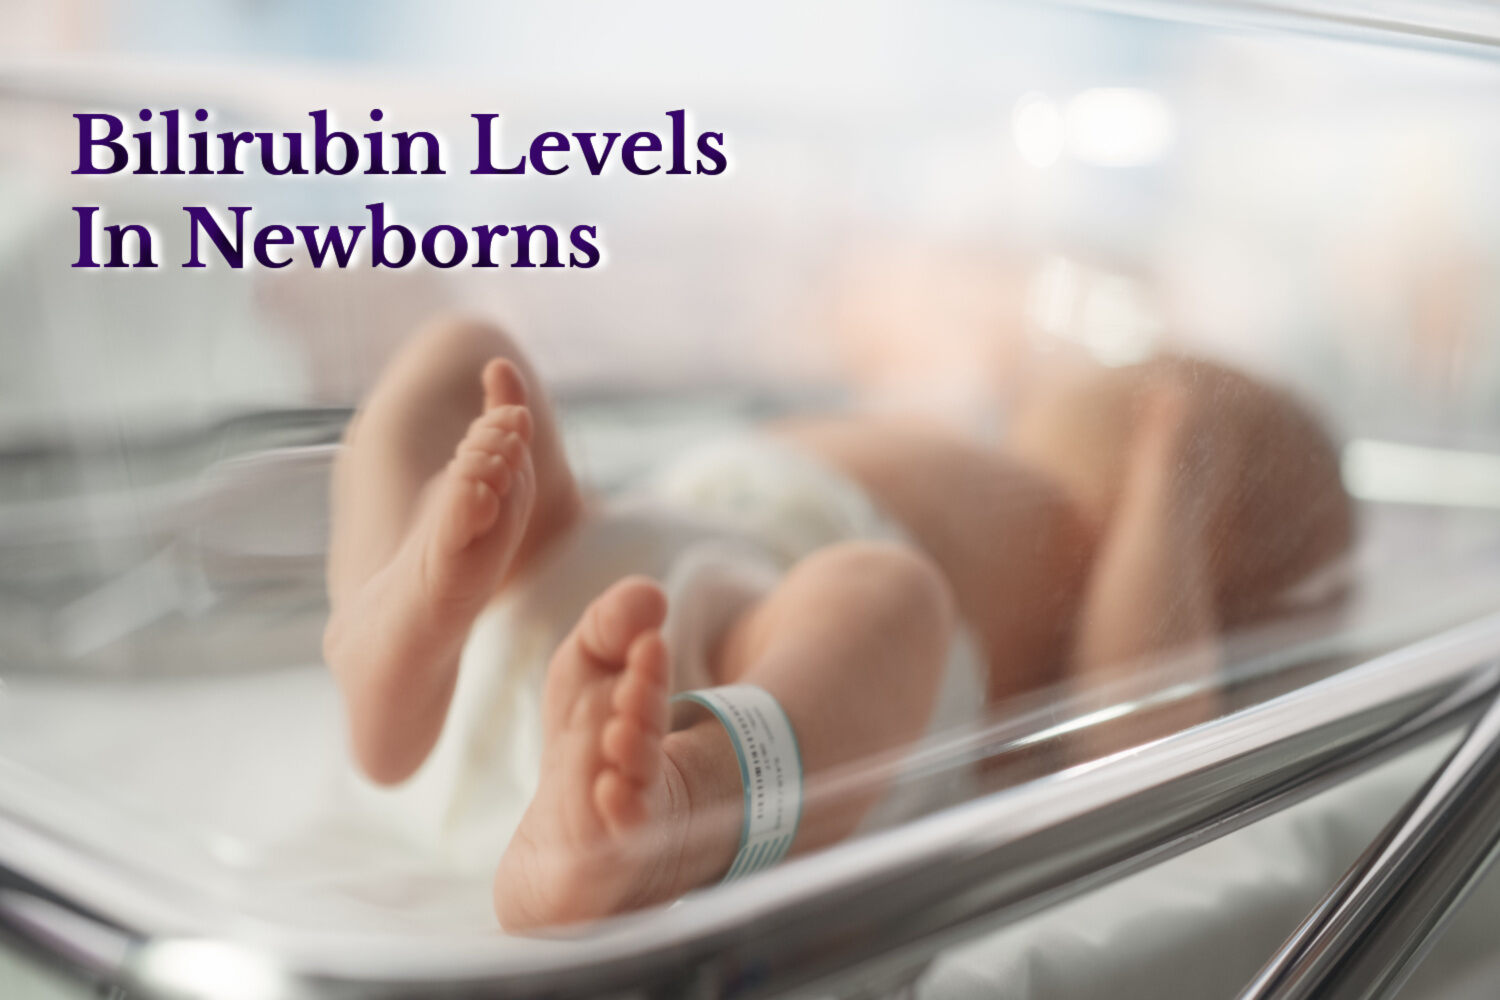 Bilirubin Levels in Newborns – Identification, Monitoring and Treatment